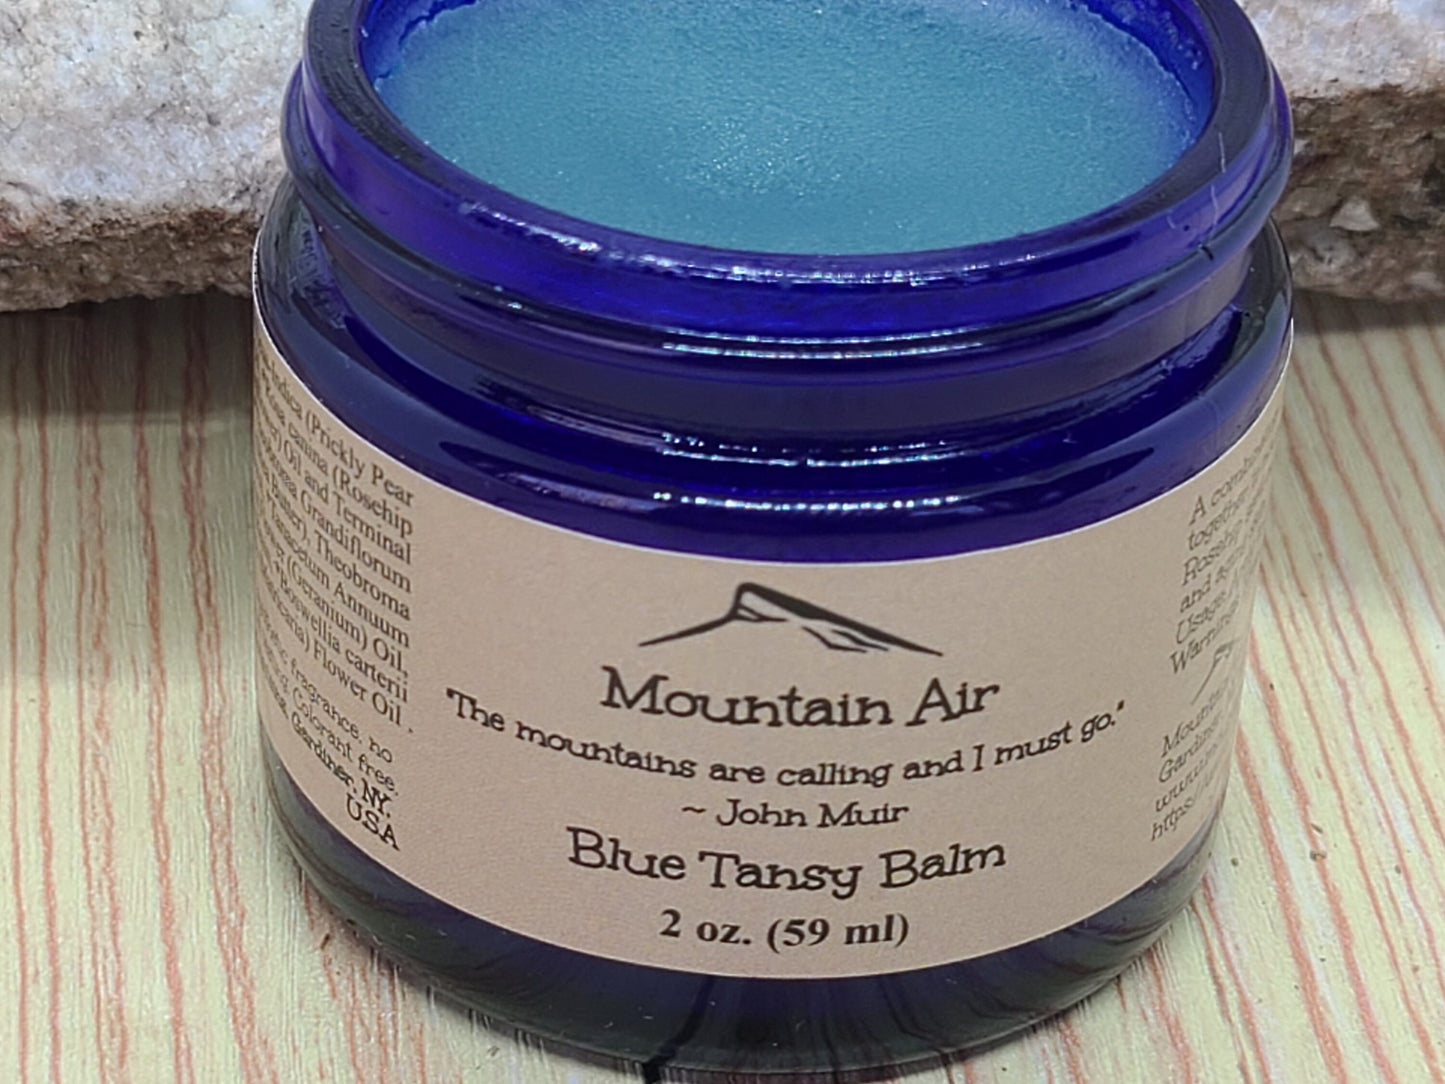 Blue Tansy Balm, 2 oz., Face Serum, Extreme Hydration, Anti-Aging, Gifts, Organic, Sensitive Skin, Nourishing, Sustainable, Vegan